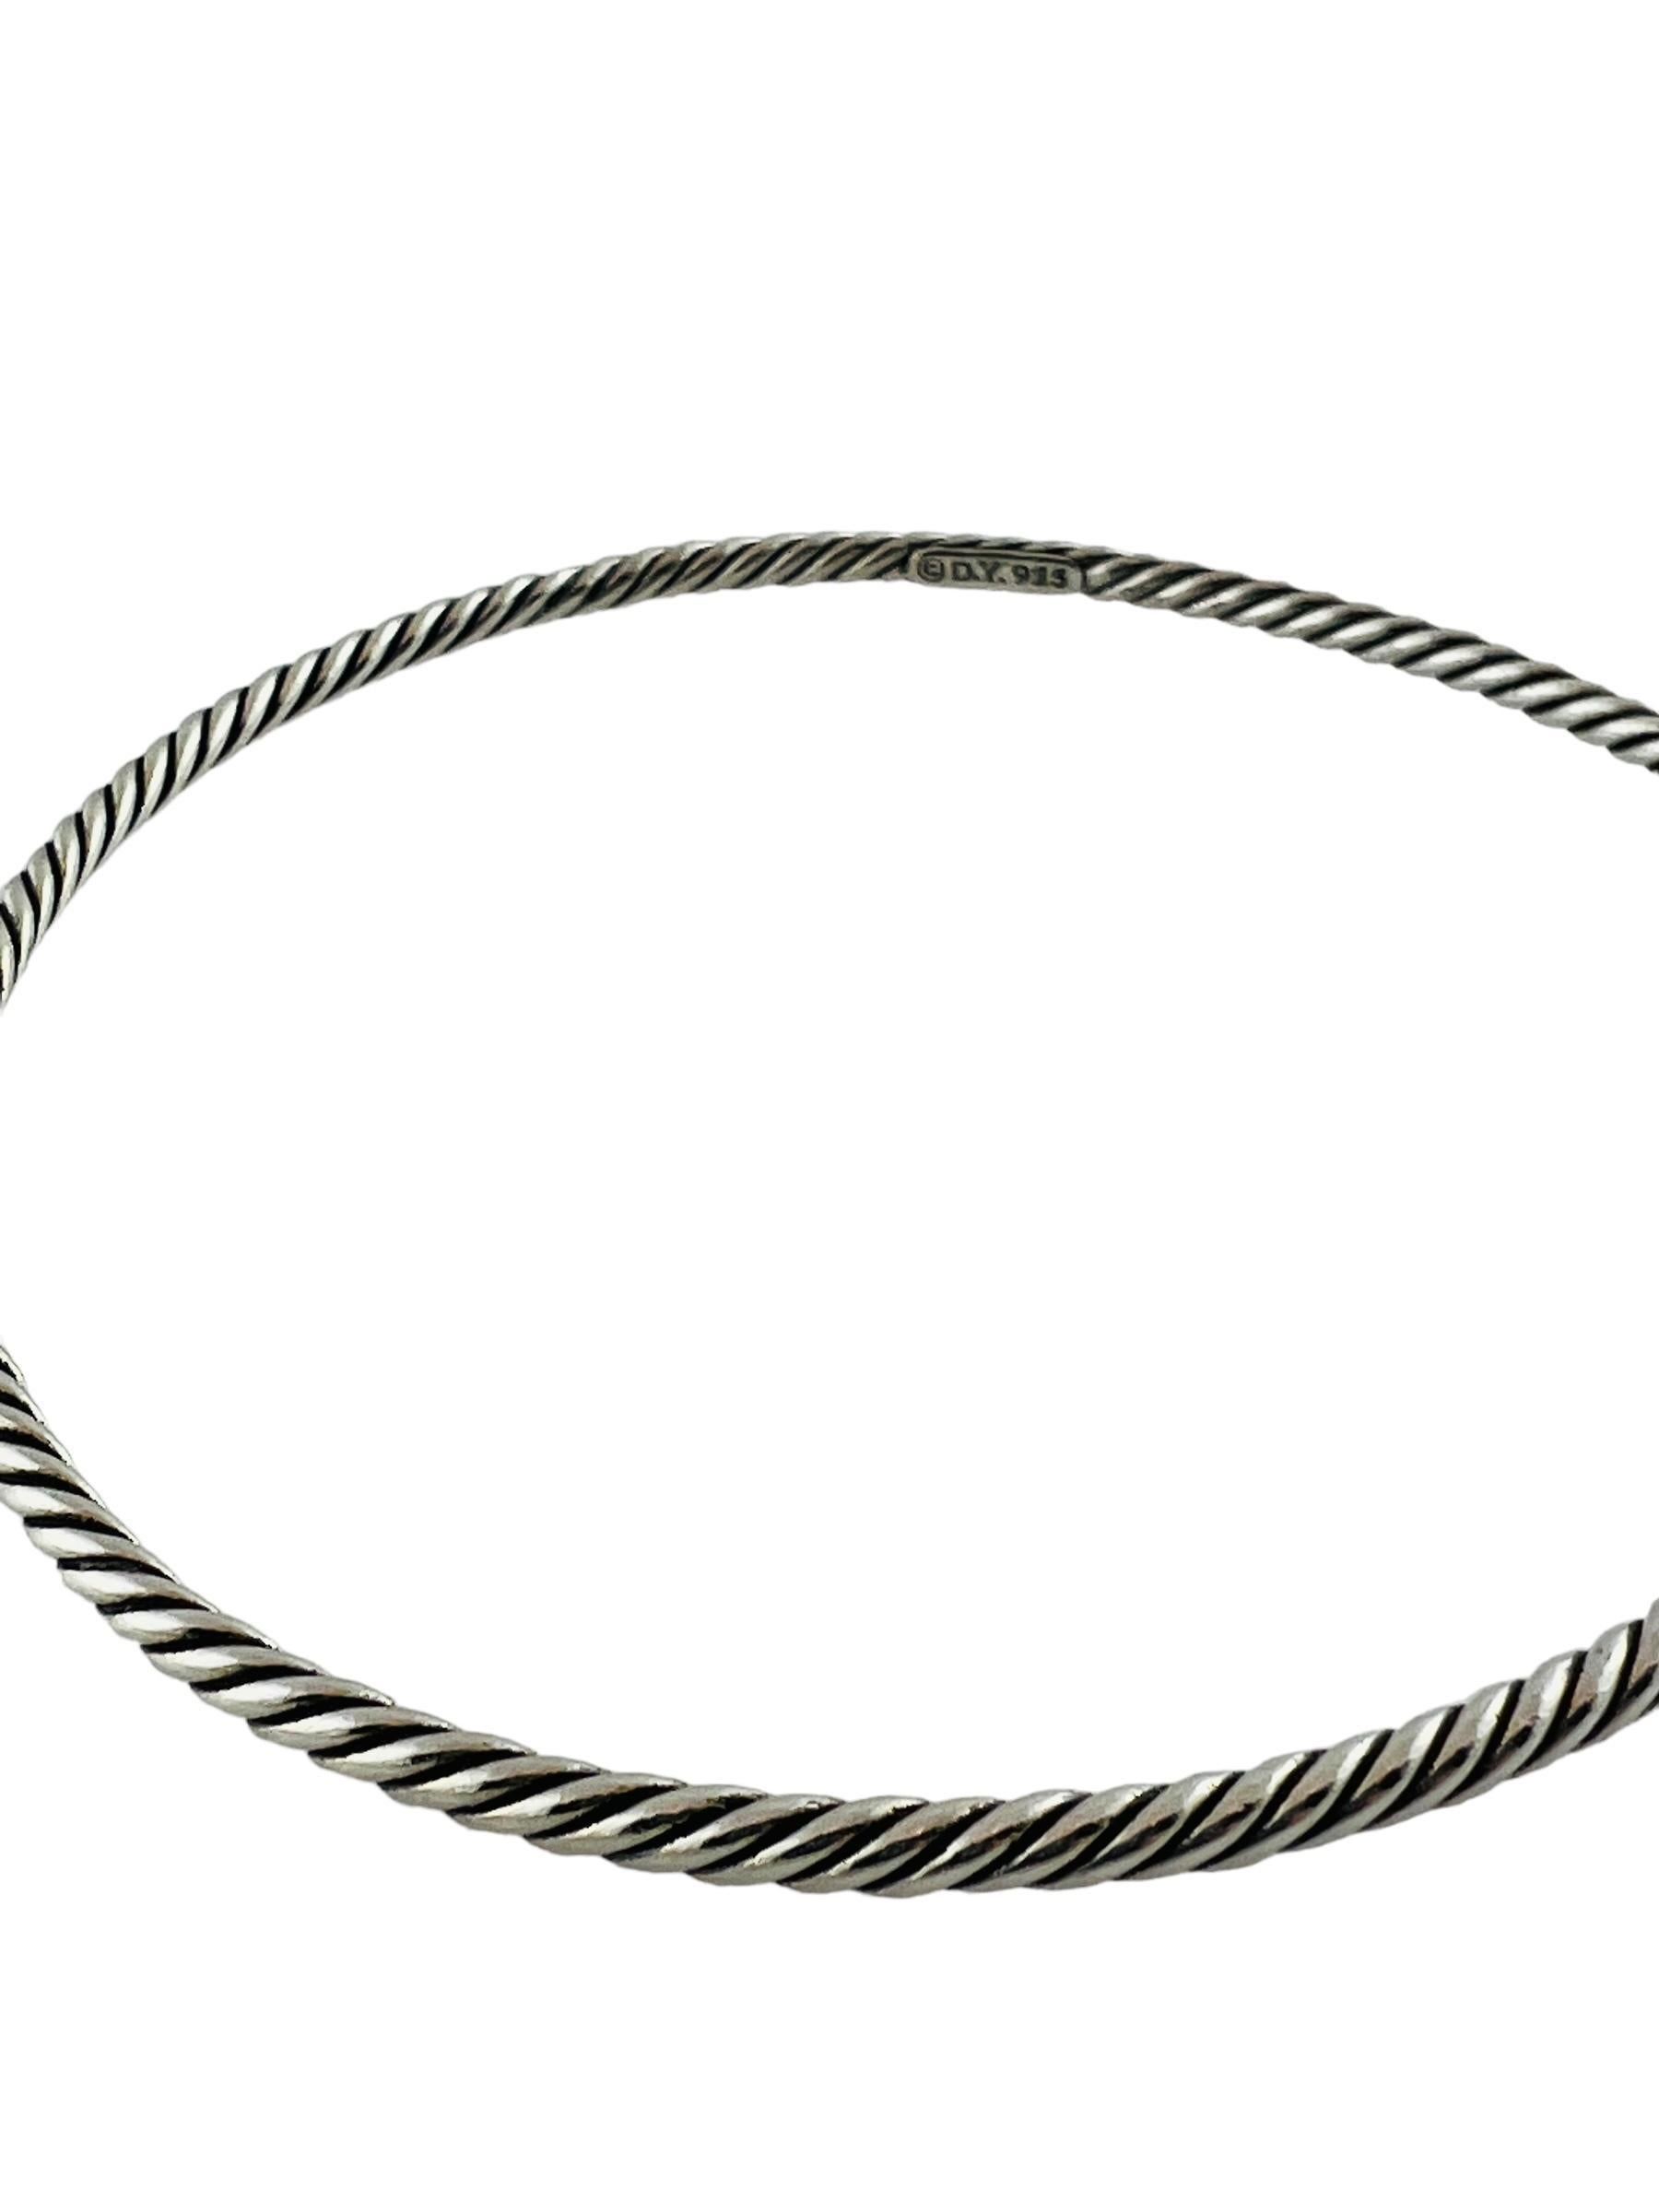 David Yurman Sterling Silver Cable Bangle Bracelet #16553 2